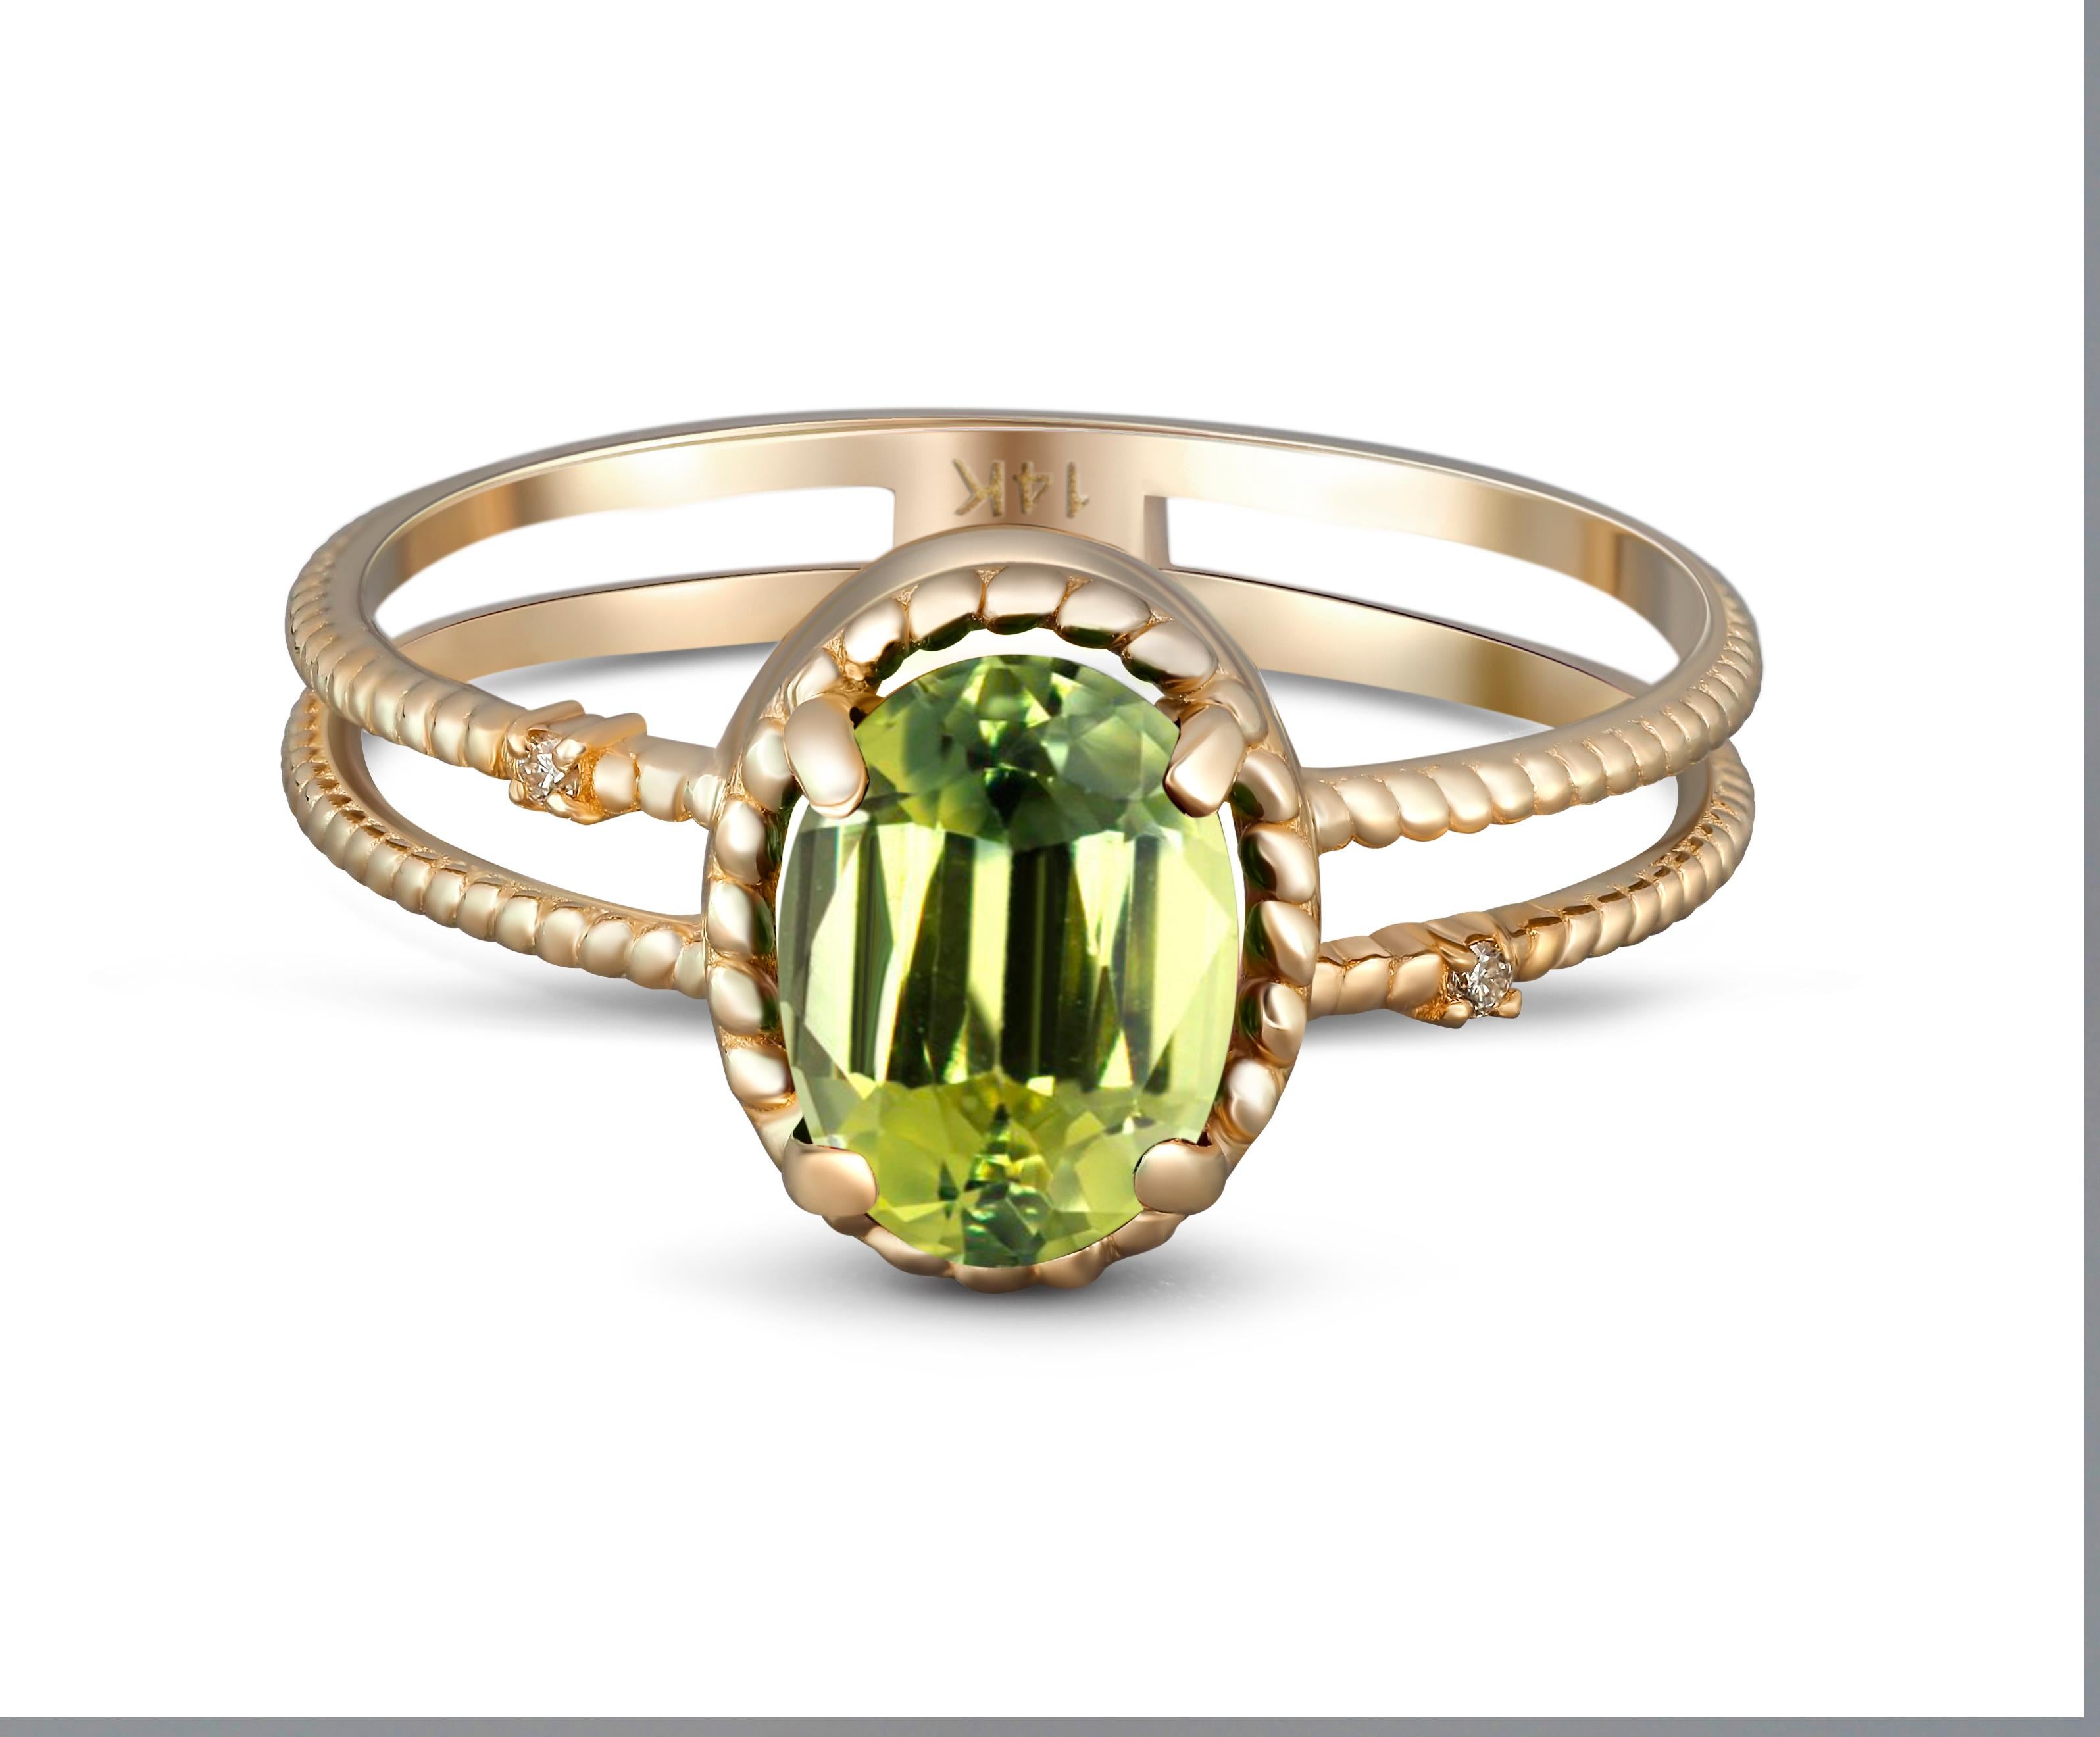 For Sale:  Oval Peridot Ring, 14k Gold Ring with Peridot, Minimalist Peridot Ring 2